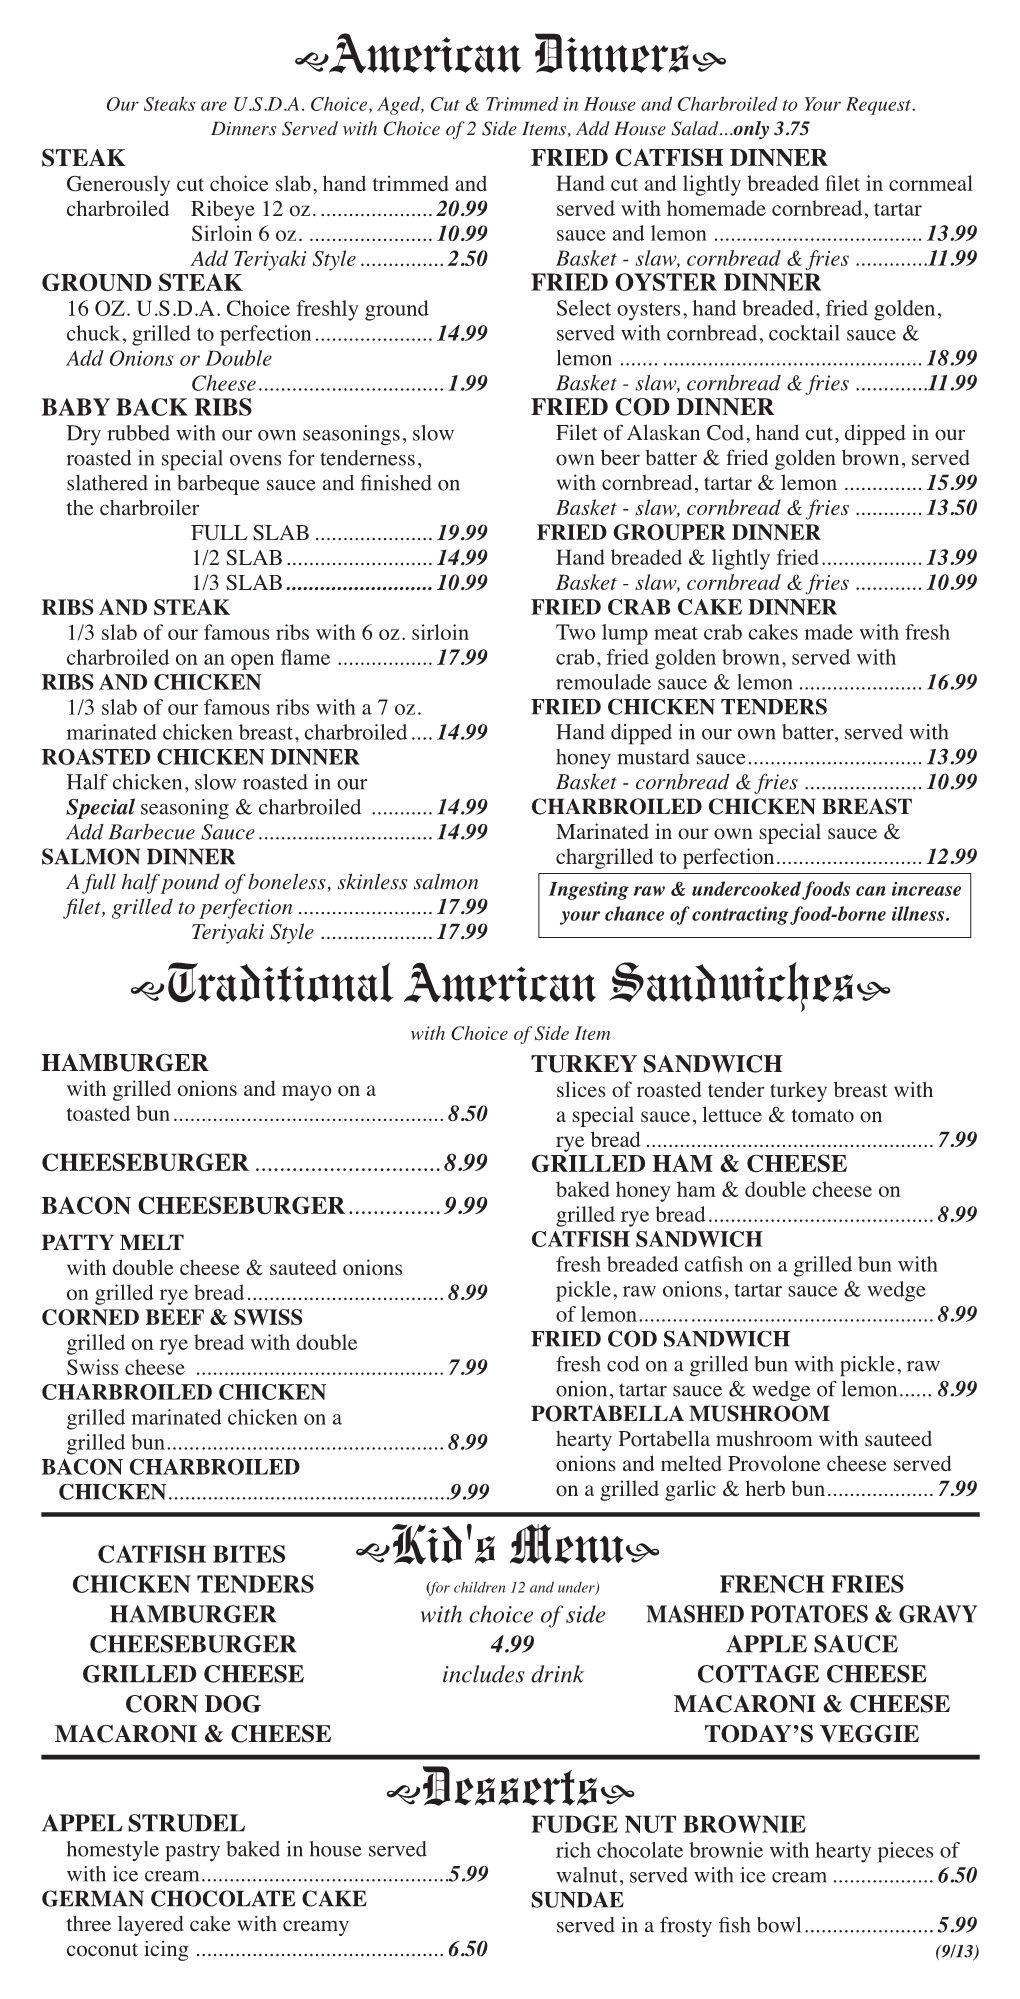 Gamerican Dinnersh Gtraditional American Sandwichesh Gkid's Menuh Gdessertsh